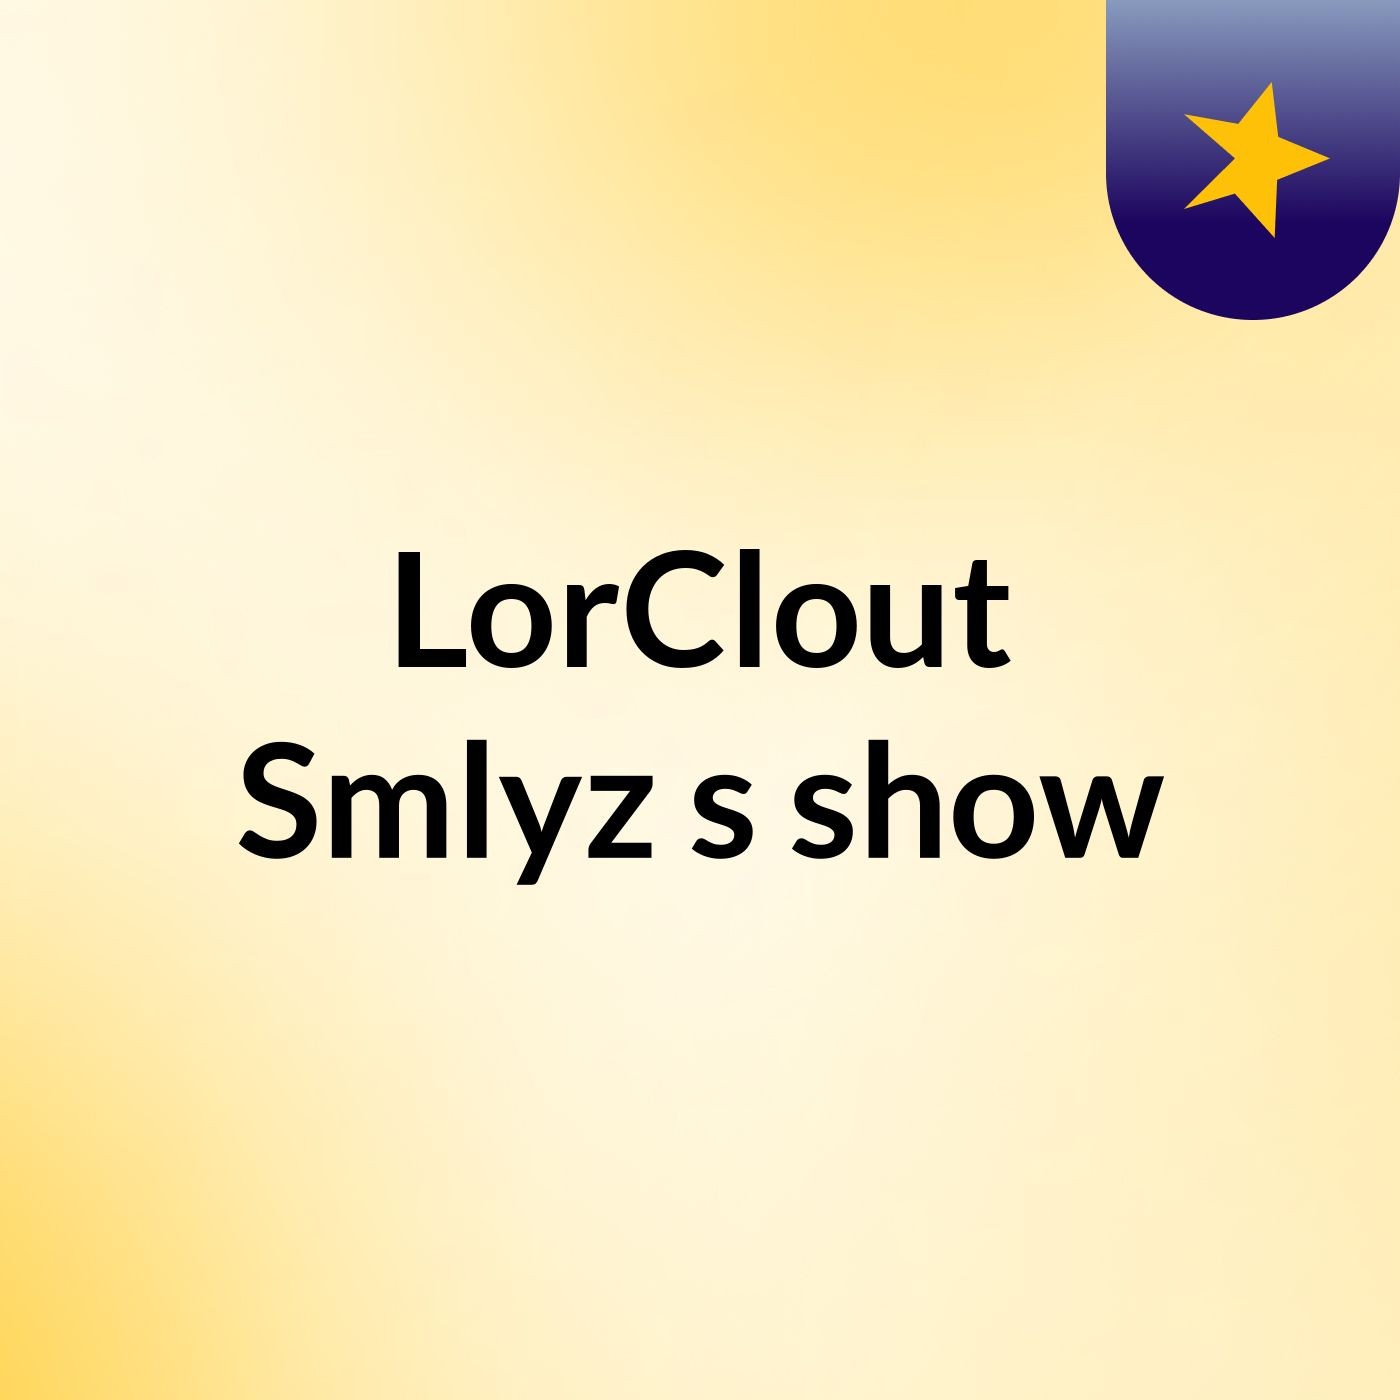 LorClout Smlyz's show